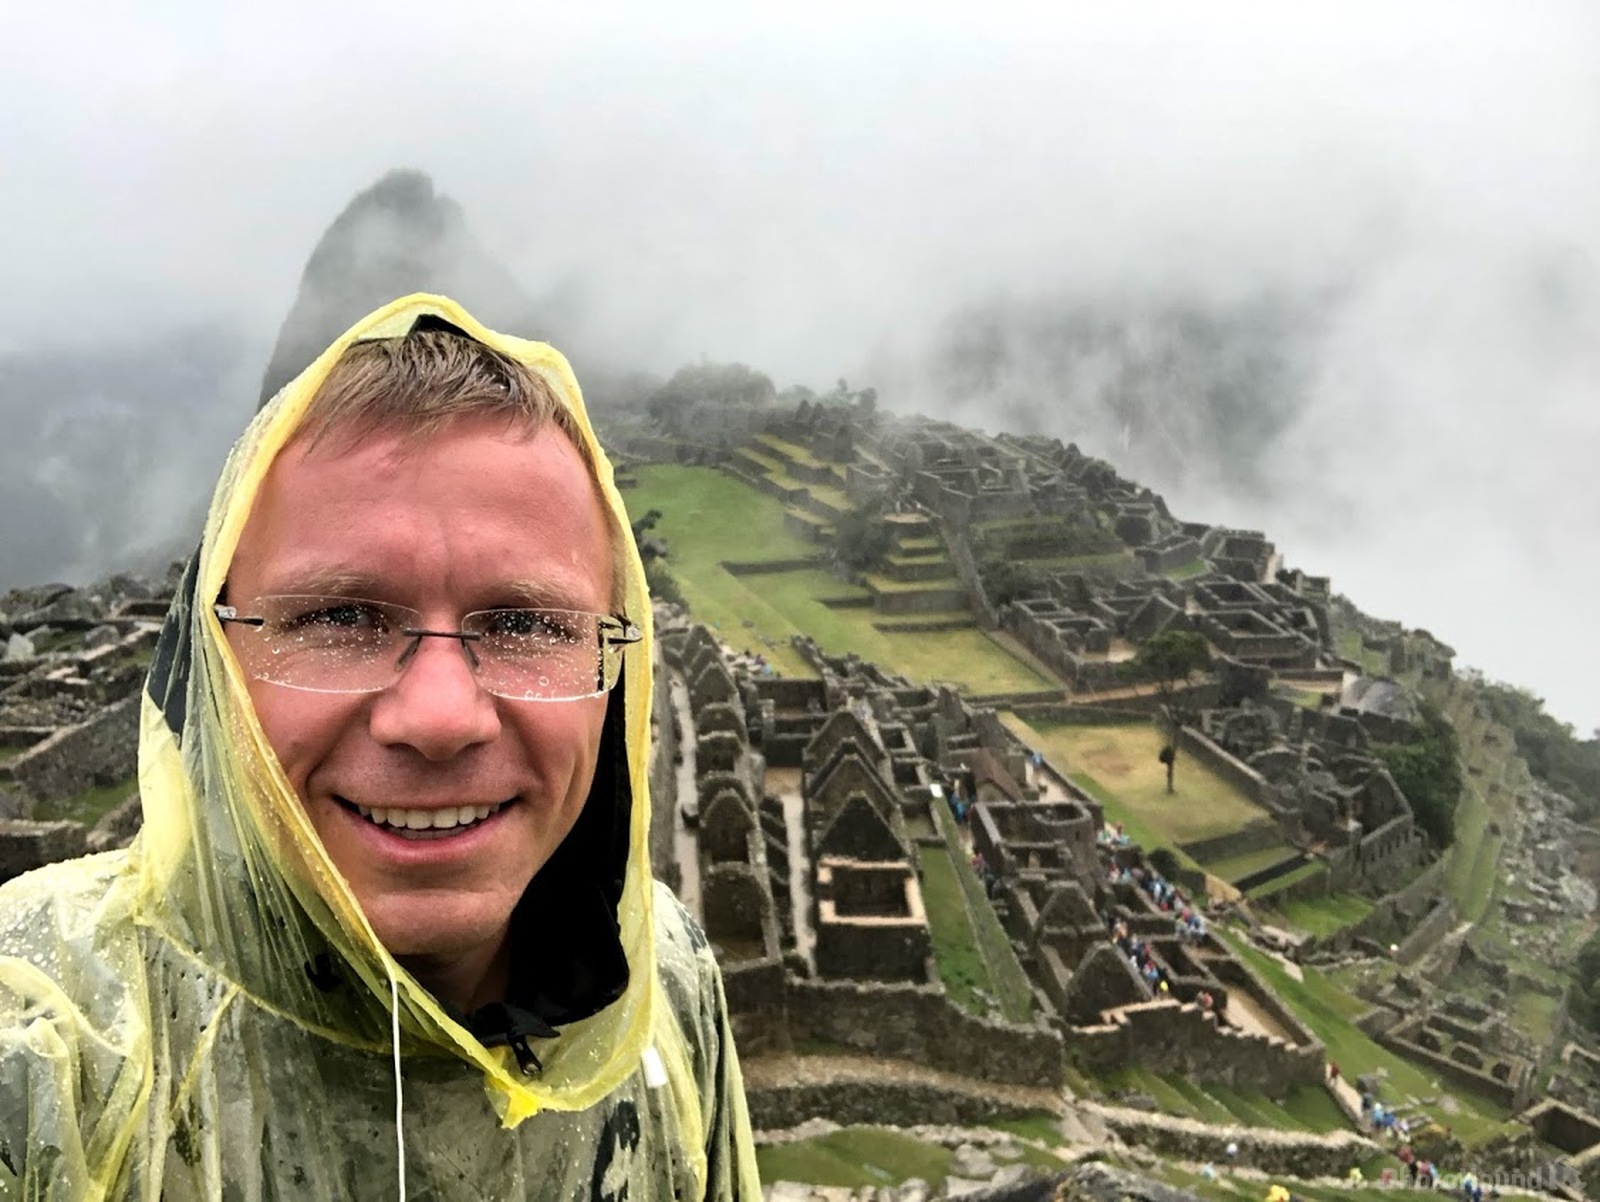 Image of Machu Picchu, Peru by Ilya Melnik